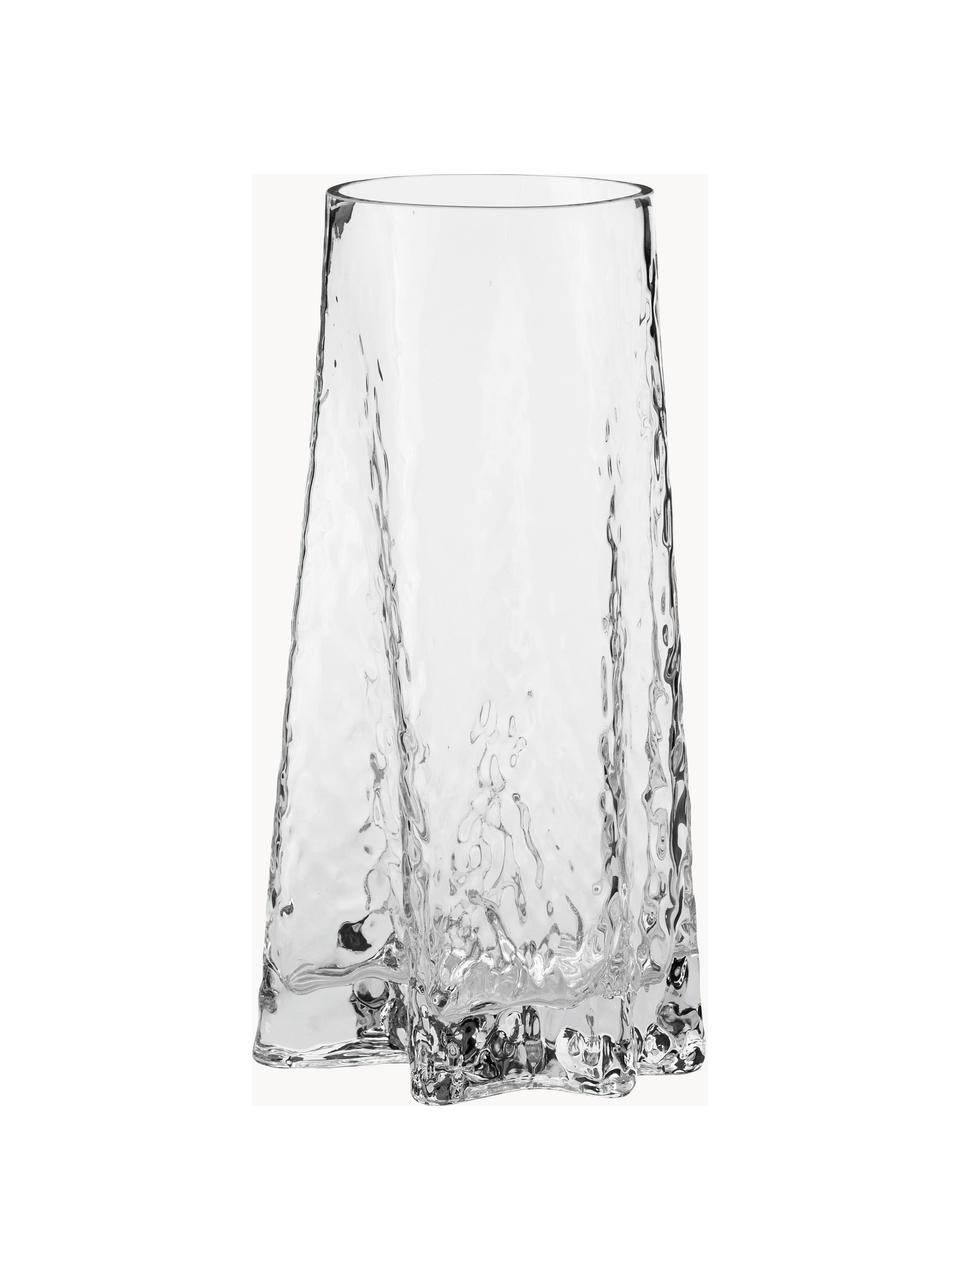 Mundgeblasene Glas-Vase Gry mit strukturierter Oberfläche, H 30 cm, Glas, mundgeblasen, Transparent, Ø 15 x H 30 cm